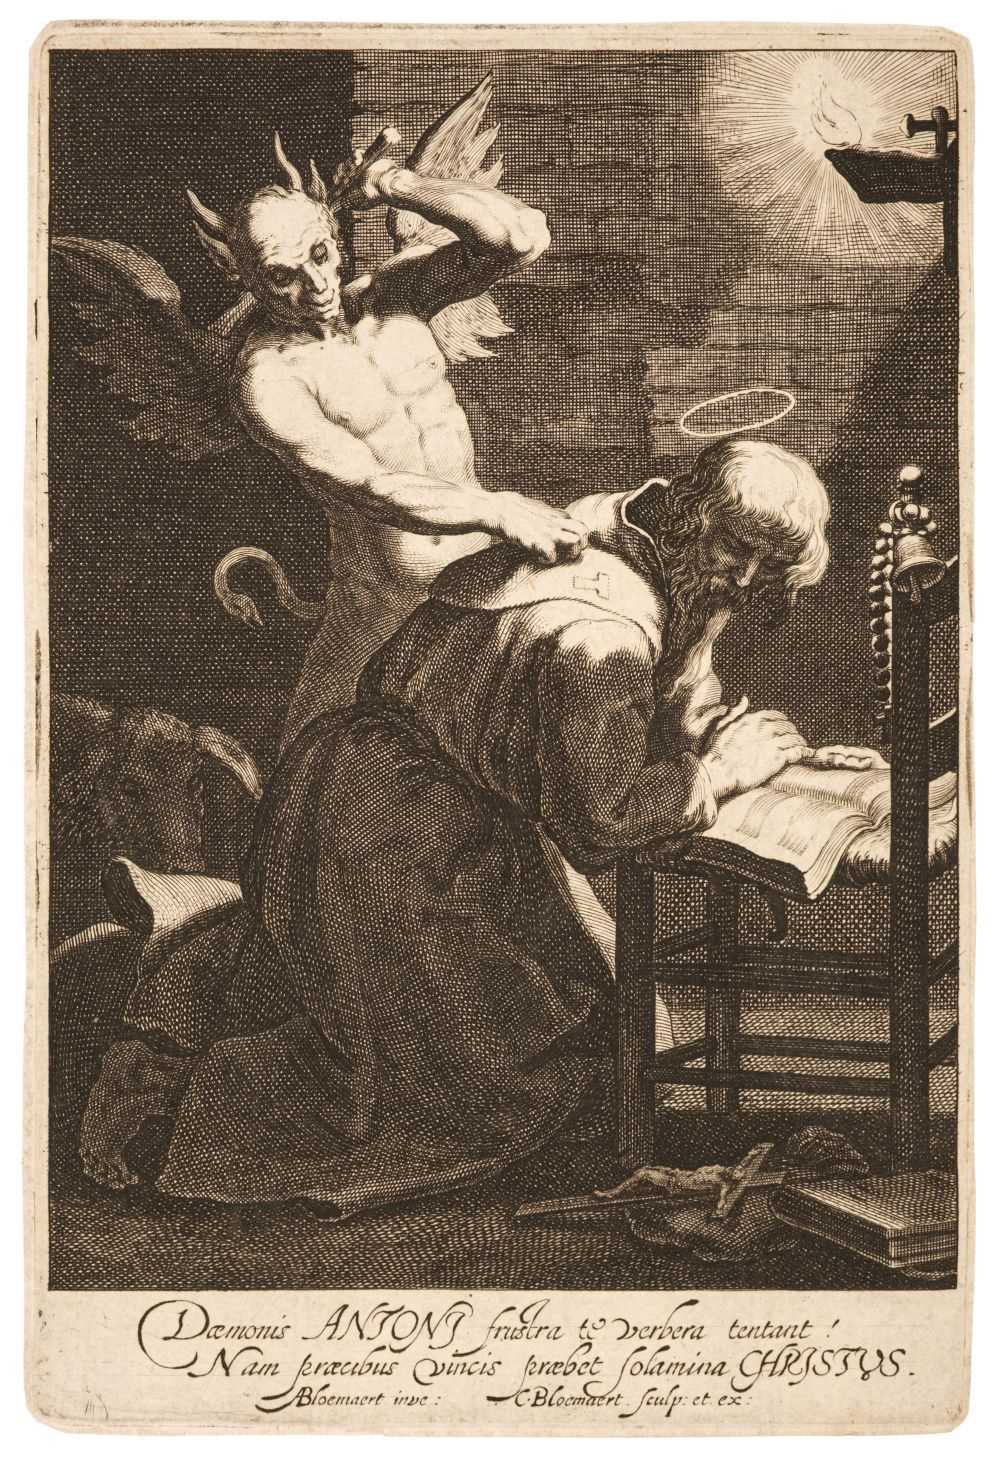 Lot 35 - Bloemaert (Cornelis, circa 1603-1692). The Temptation of St. Anthony